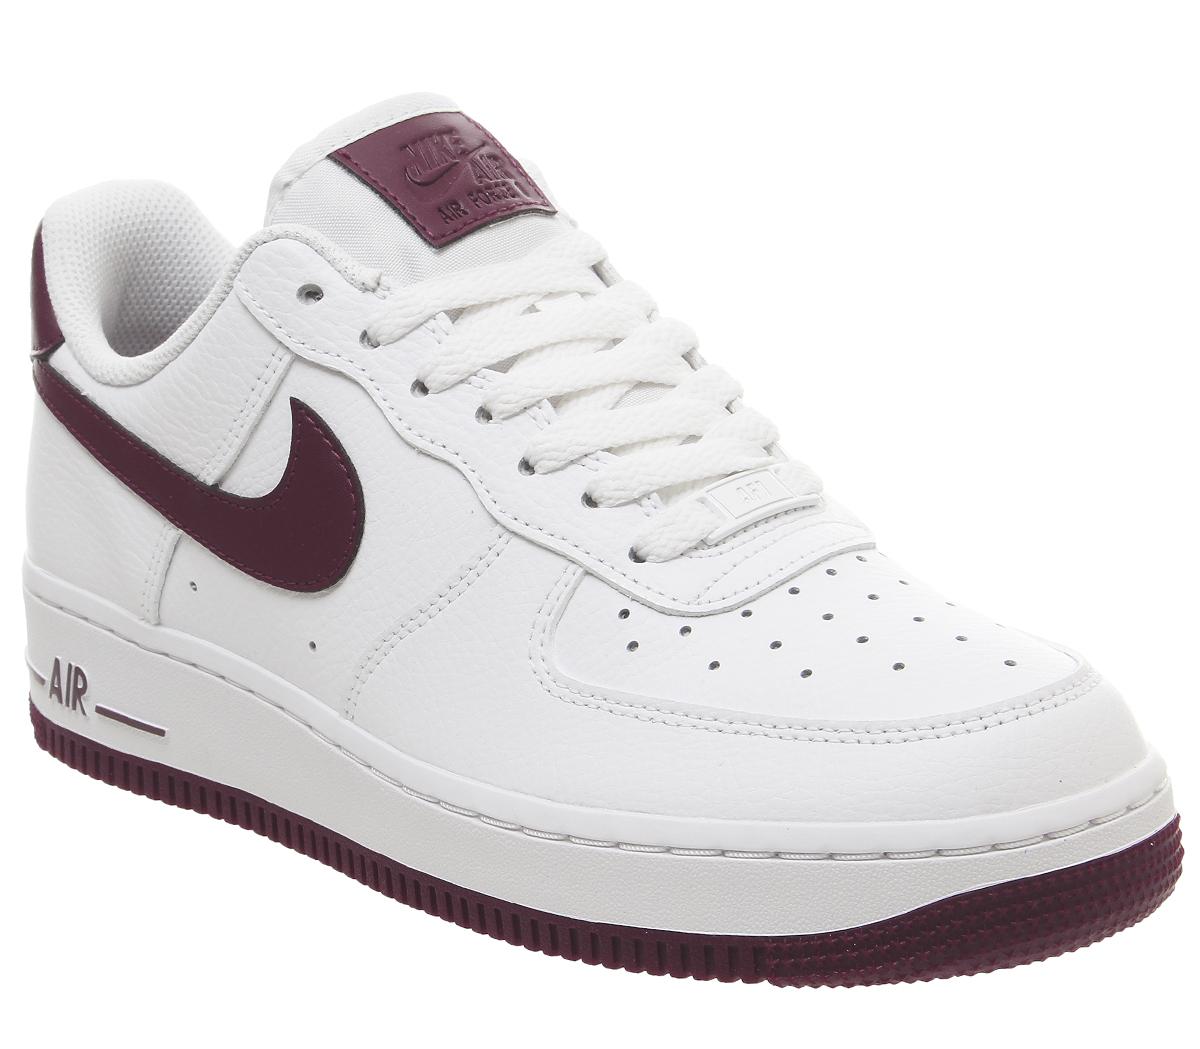 Nike Air Force 1 07 Trainers White Bordeaux - Sneaker damen